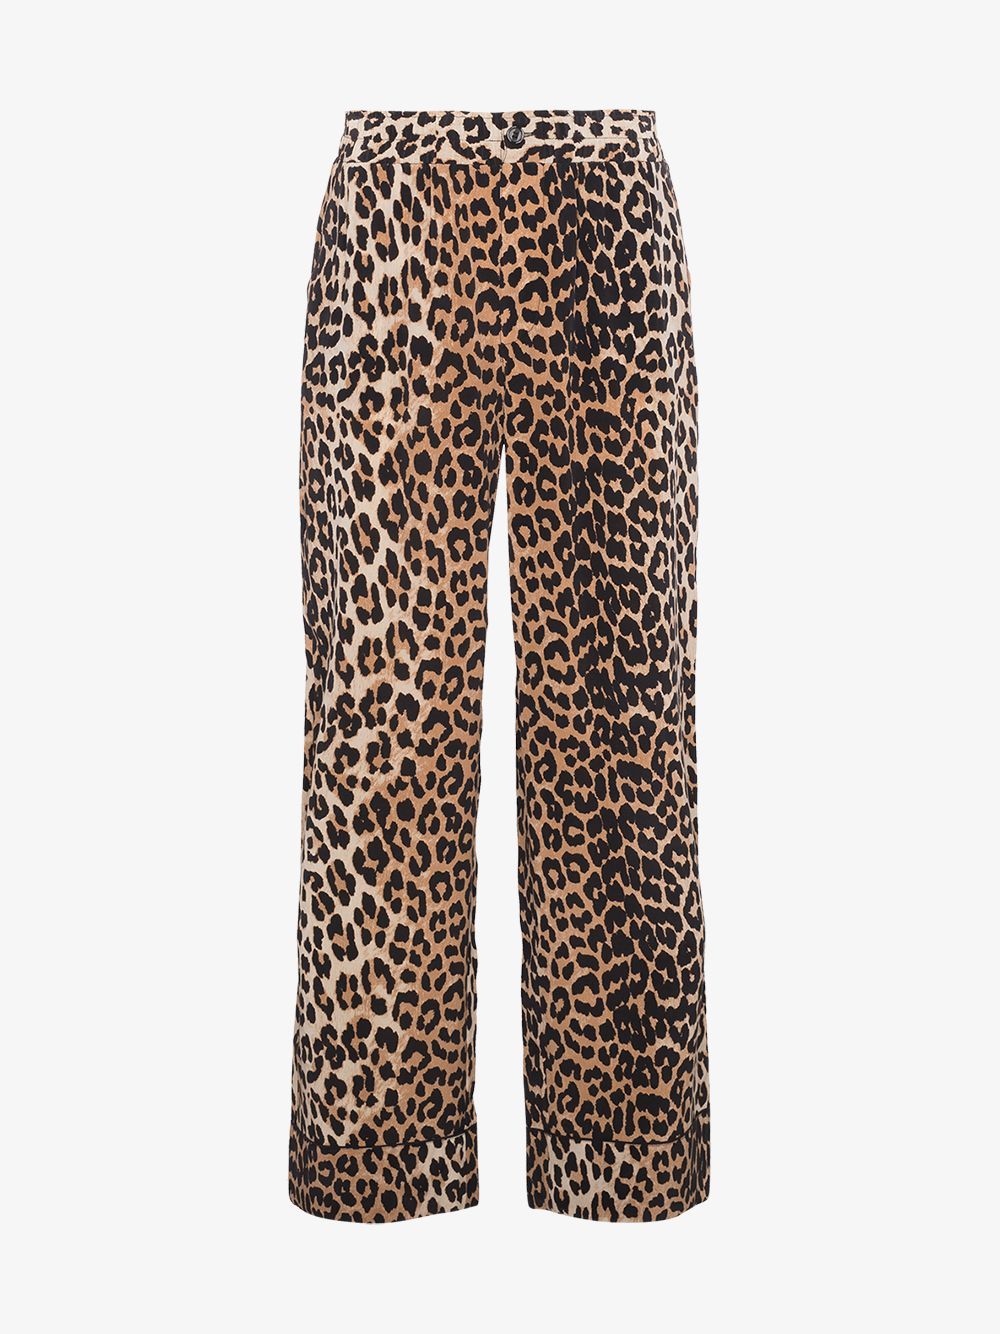 Ganni leopard print trousers | Browns Fashion